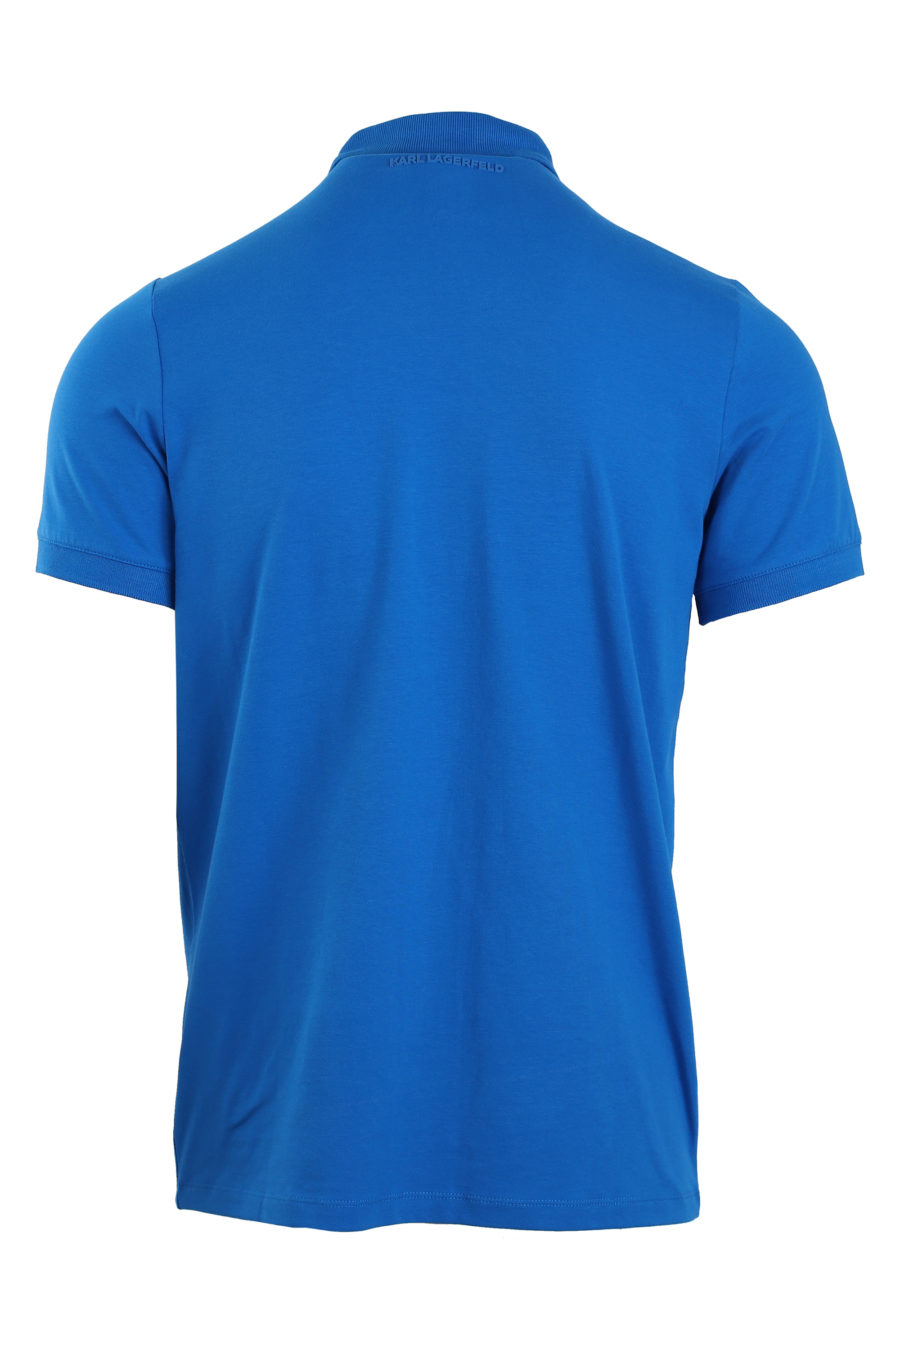 Blue polo shirt with monochrome logo - IMG 0883